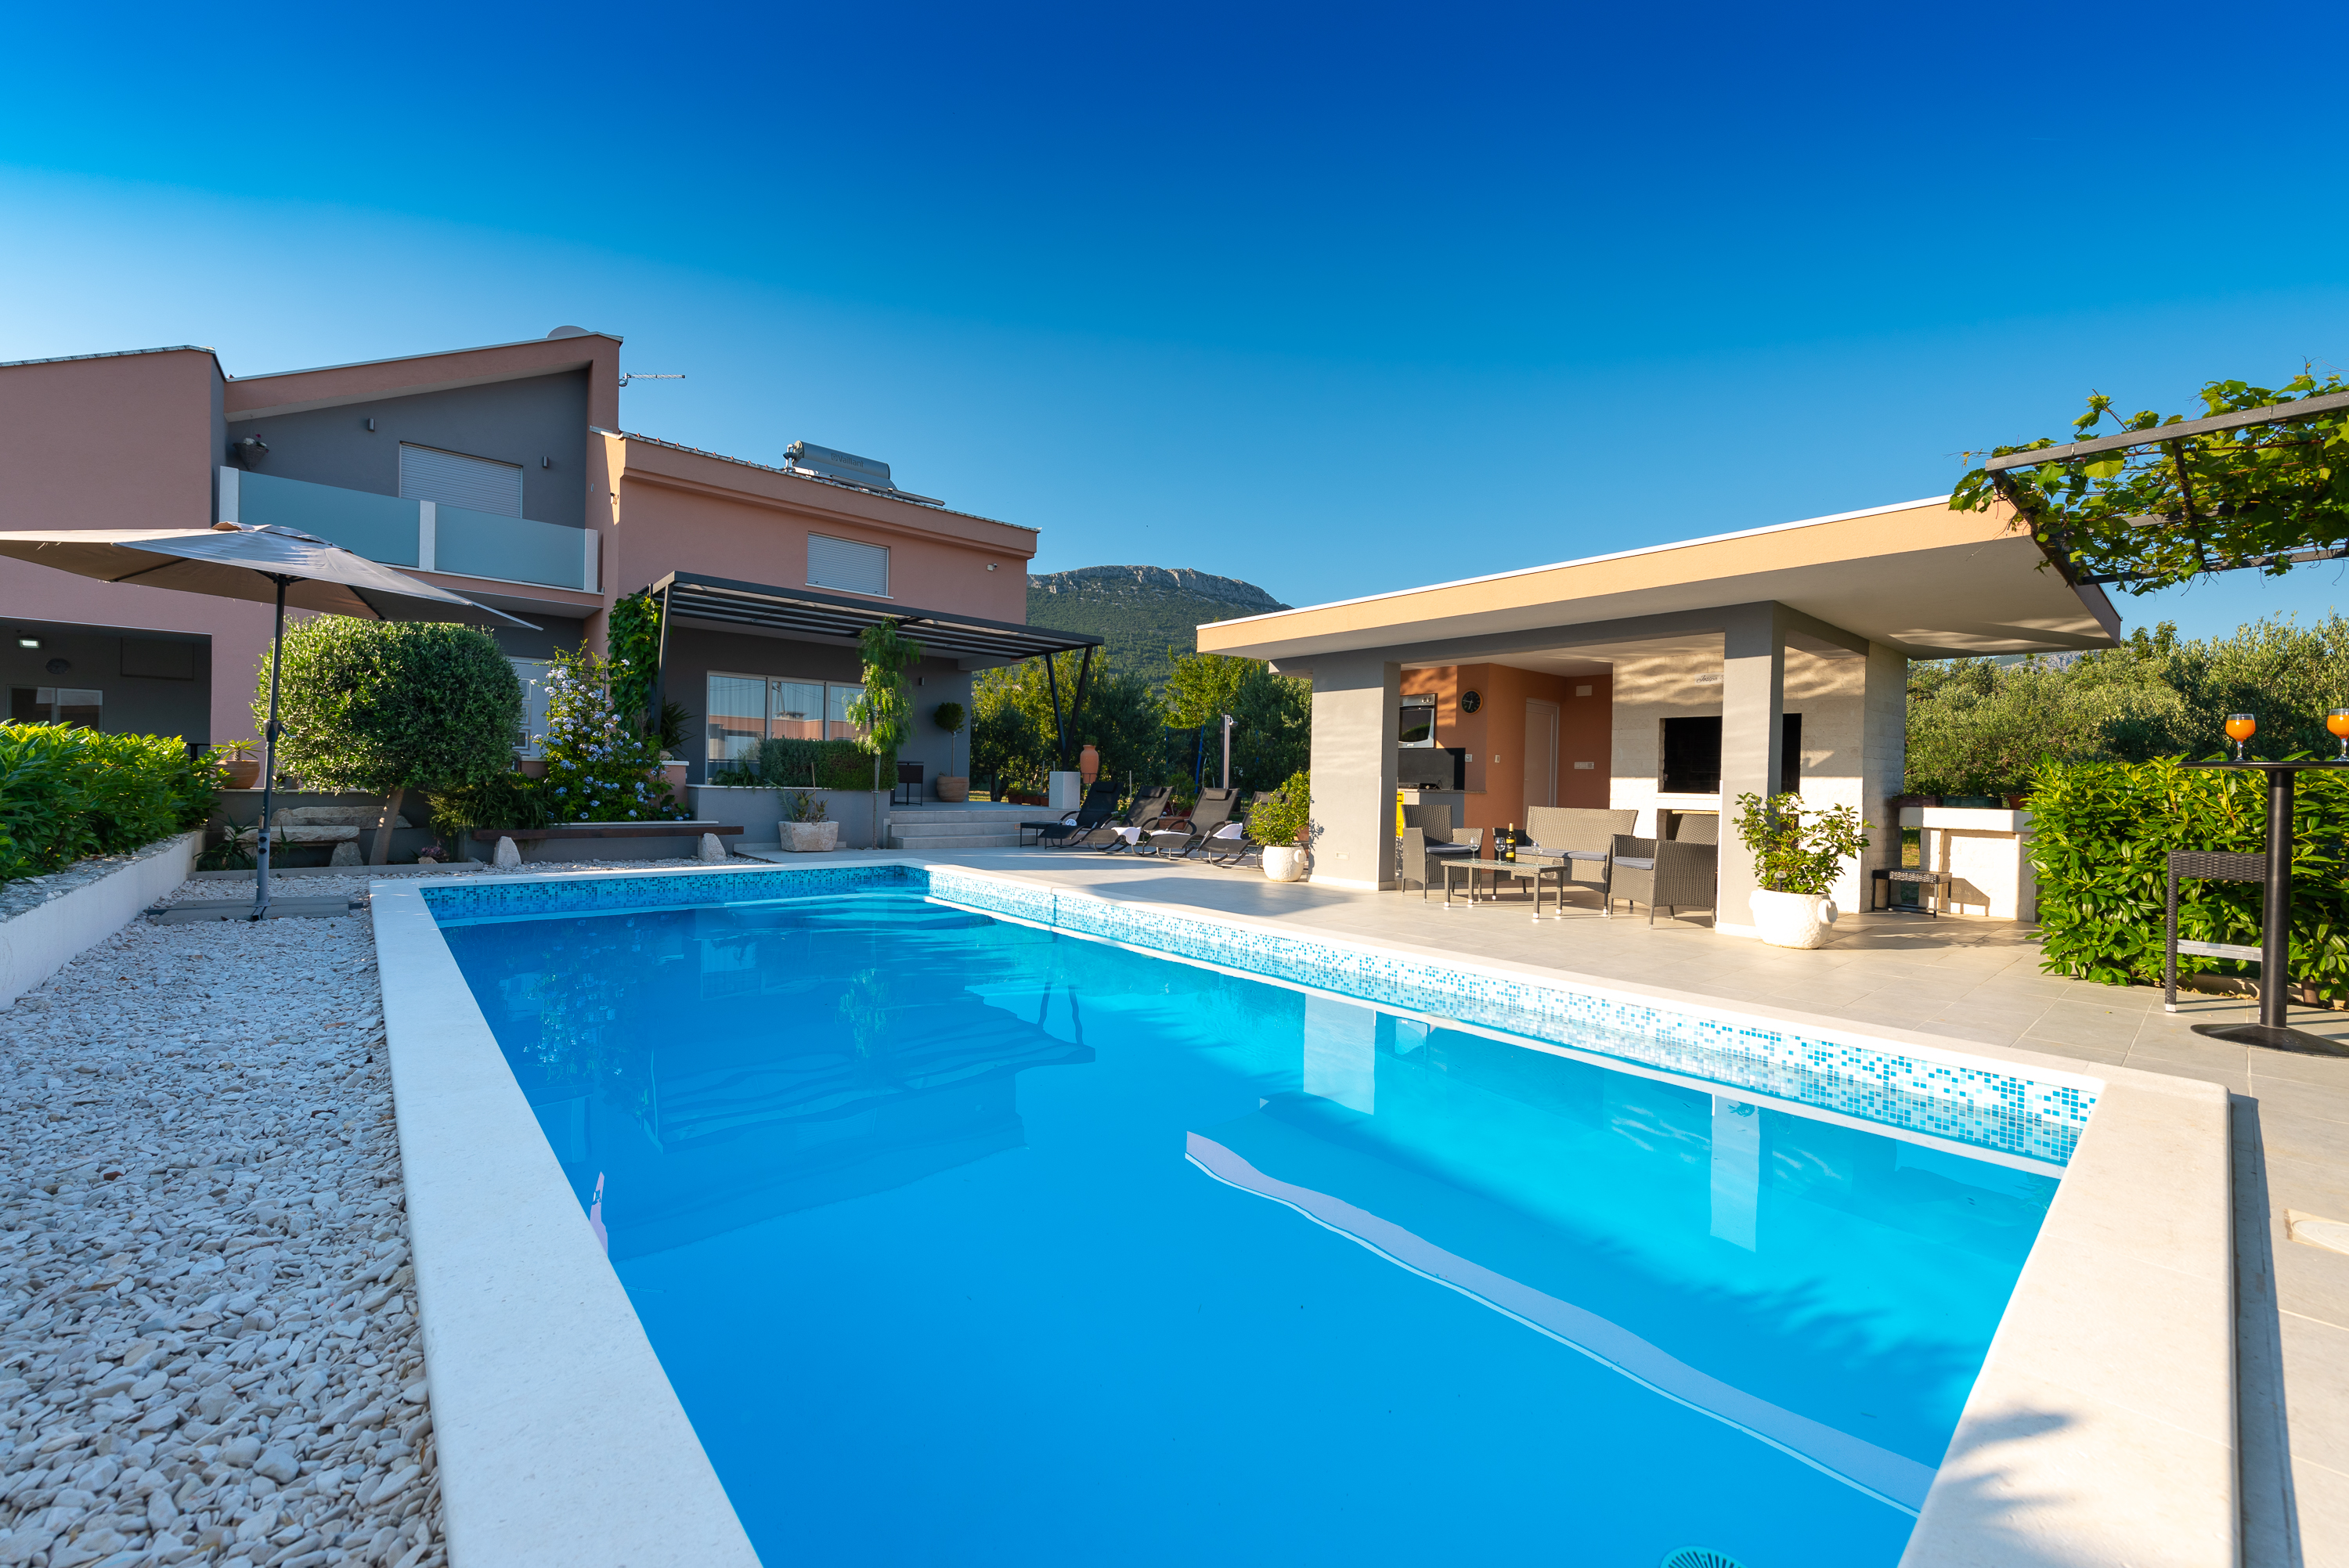 Villa Toni with 5 bedrooms and heated pool - Villas for Rent in Kaštel  Stari, Splitsko-dalmatinska županija, Croatia - Airbnb